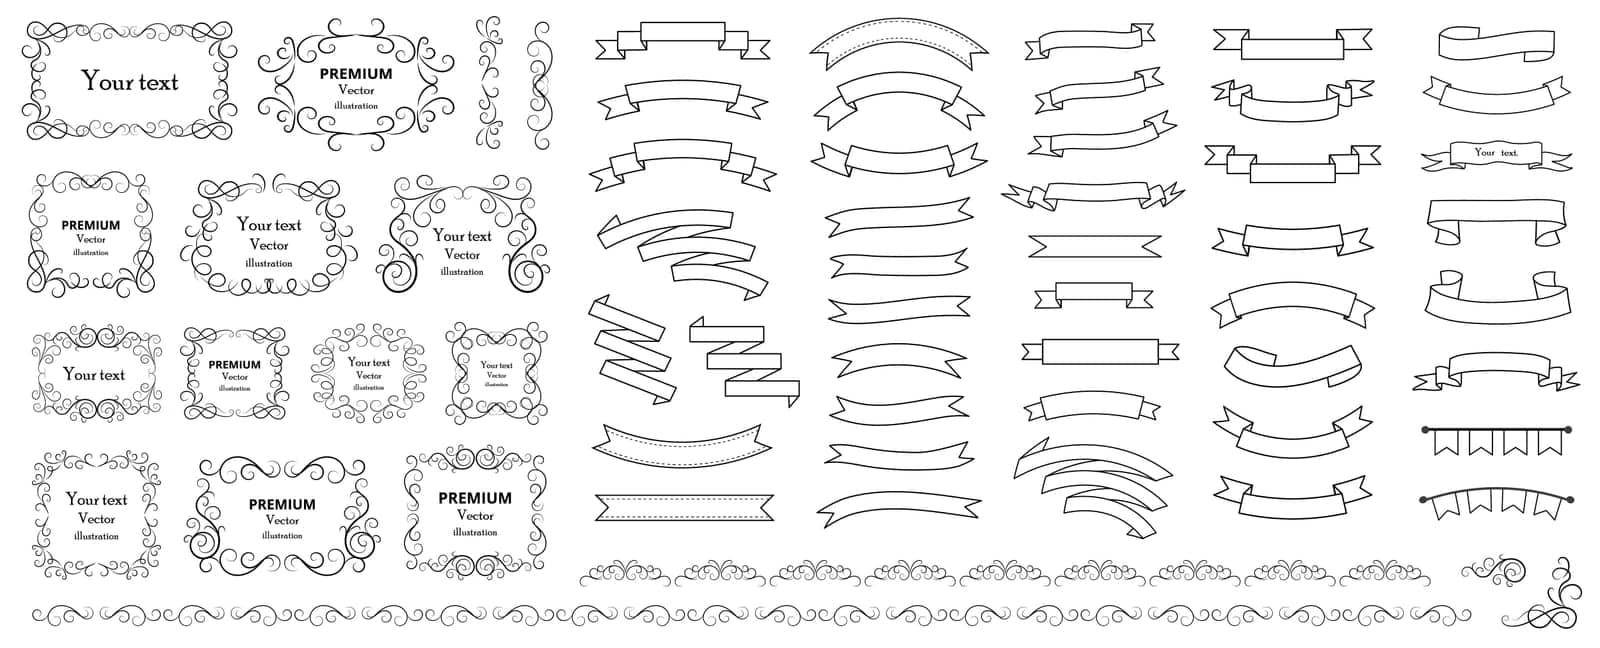 Calligraphic design elements . Ribbon elements by NataliPopova